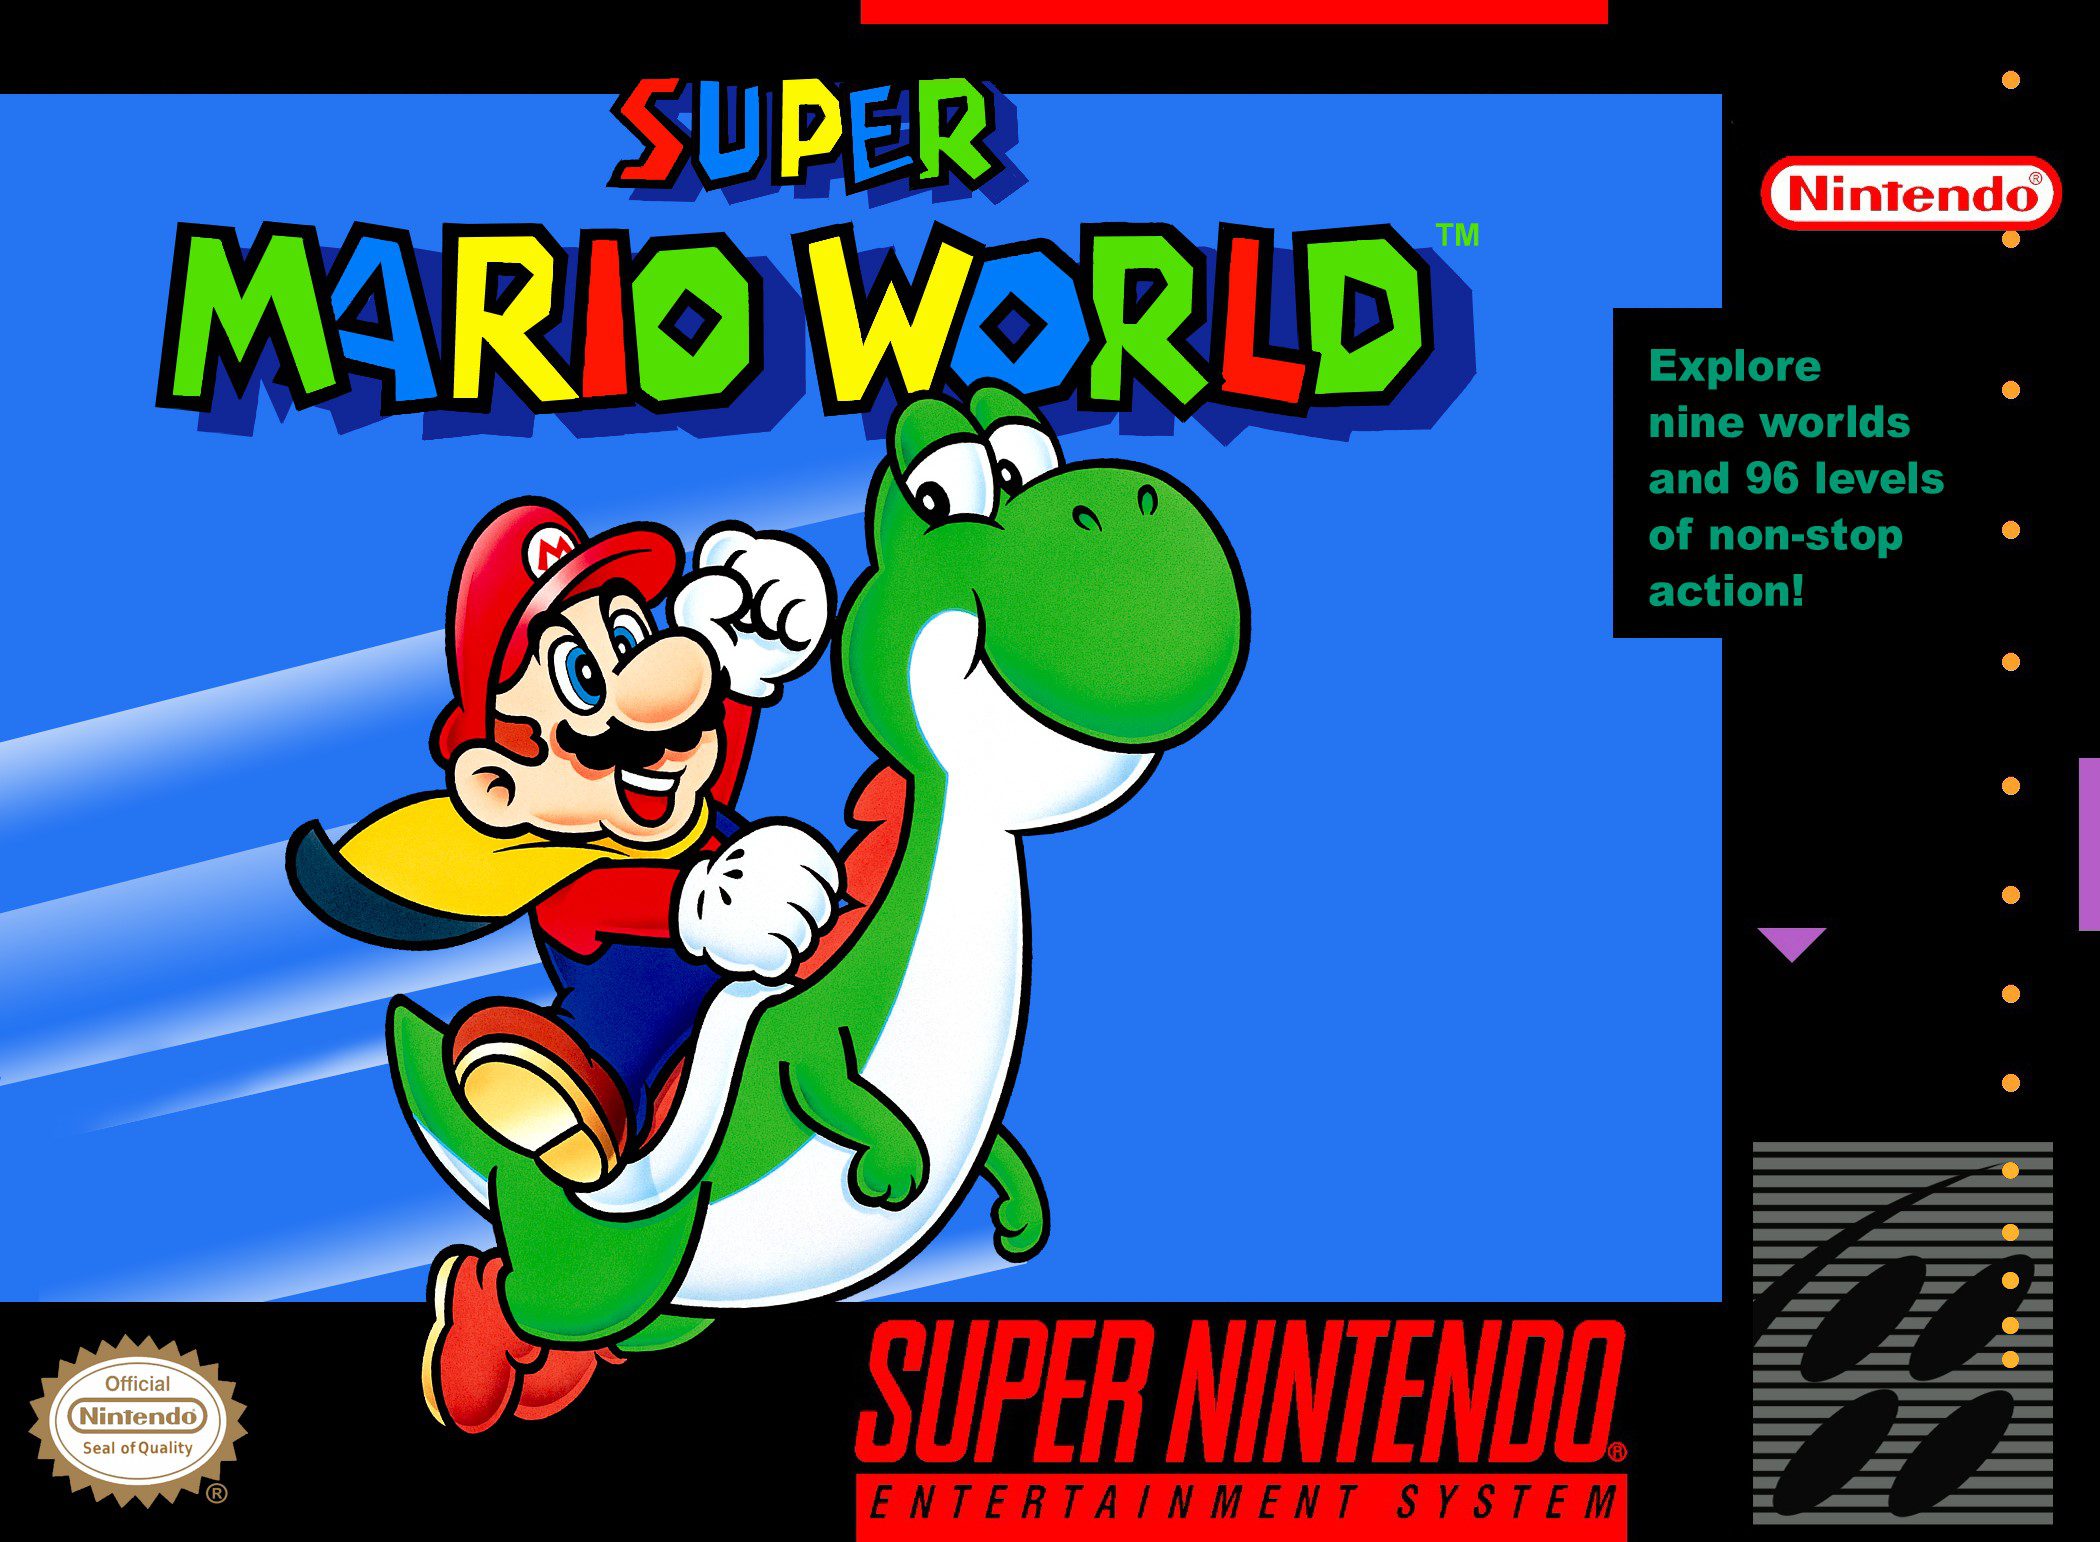 Super Mario World for Super Nintendo Entertainment System (SNES)